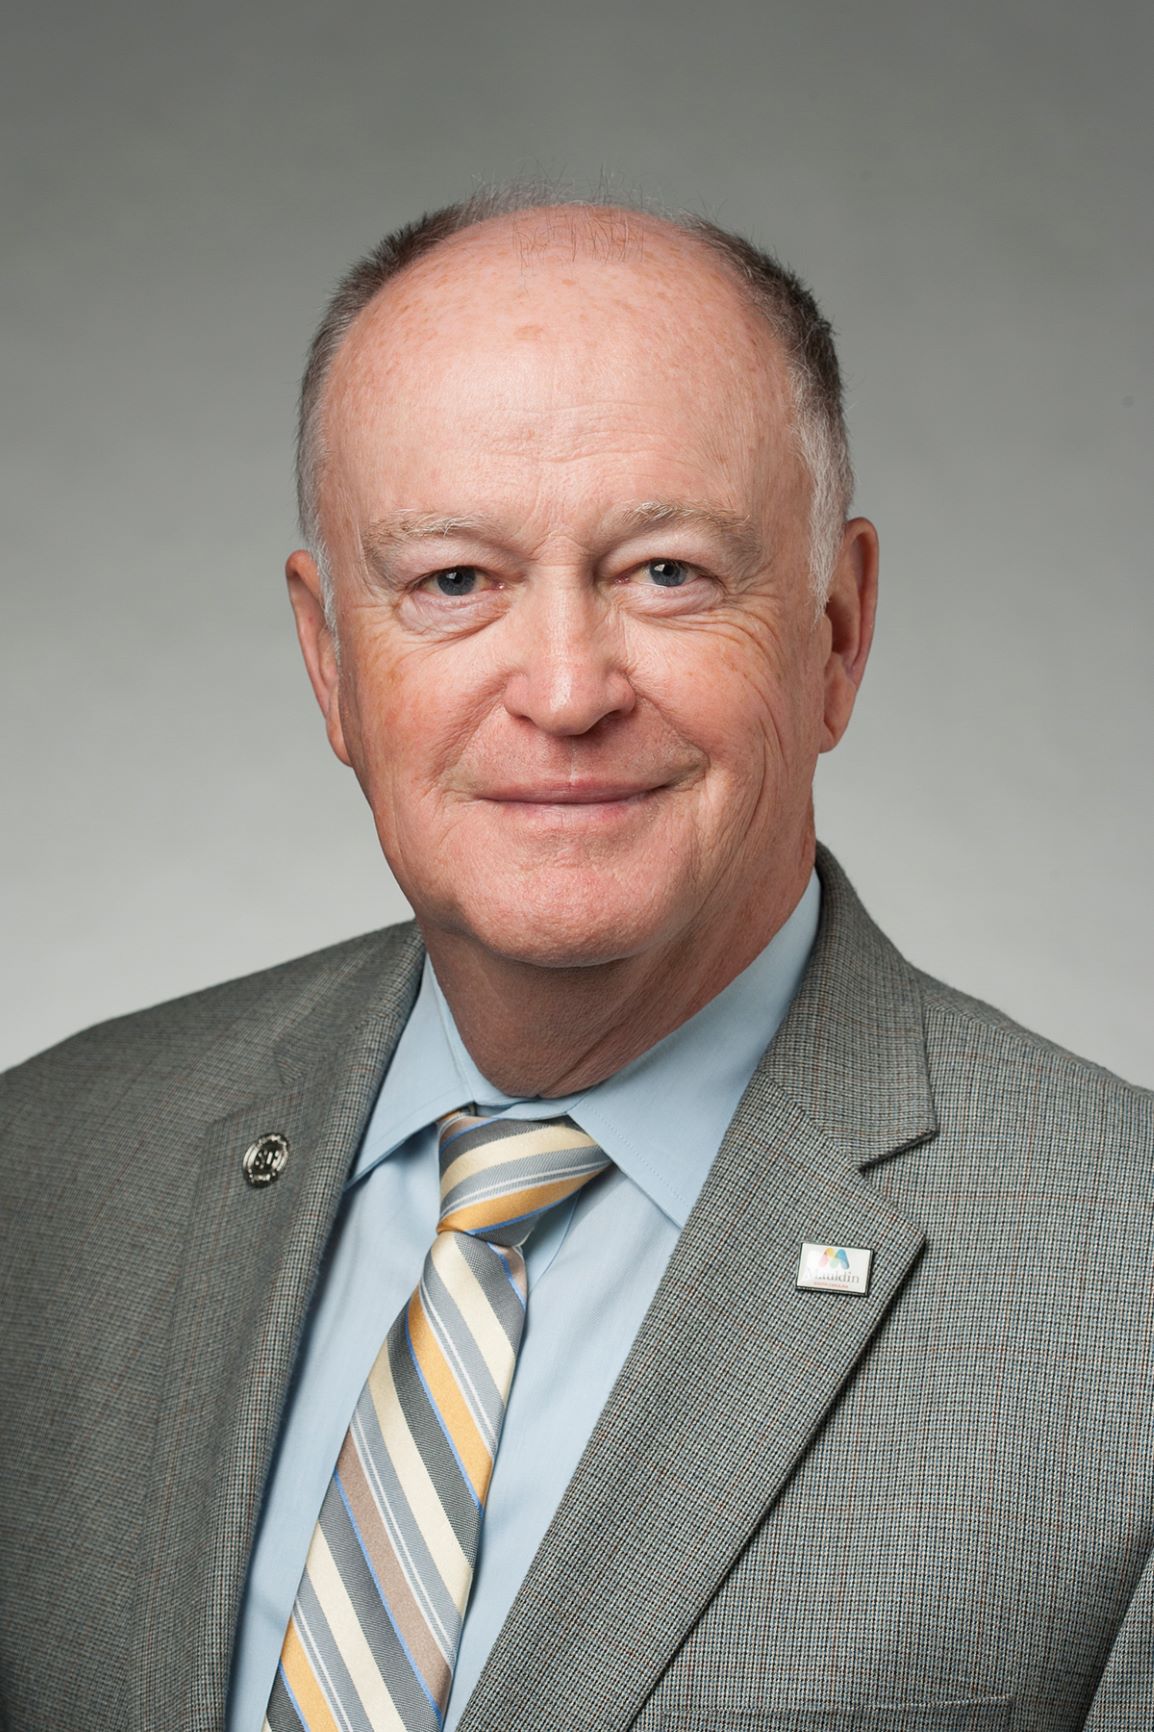 Mayor Dennis Raines